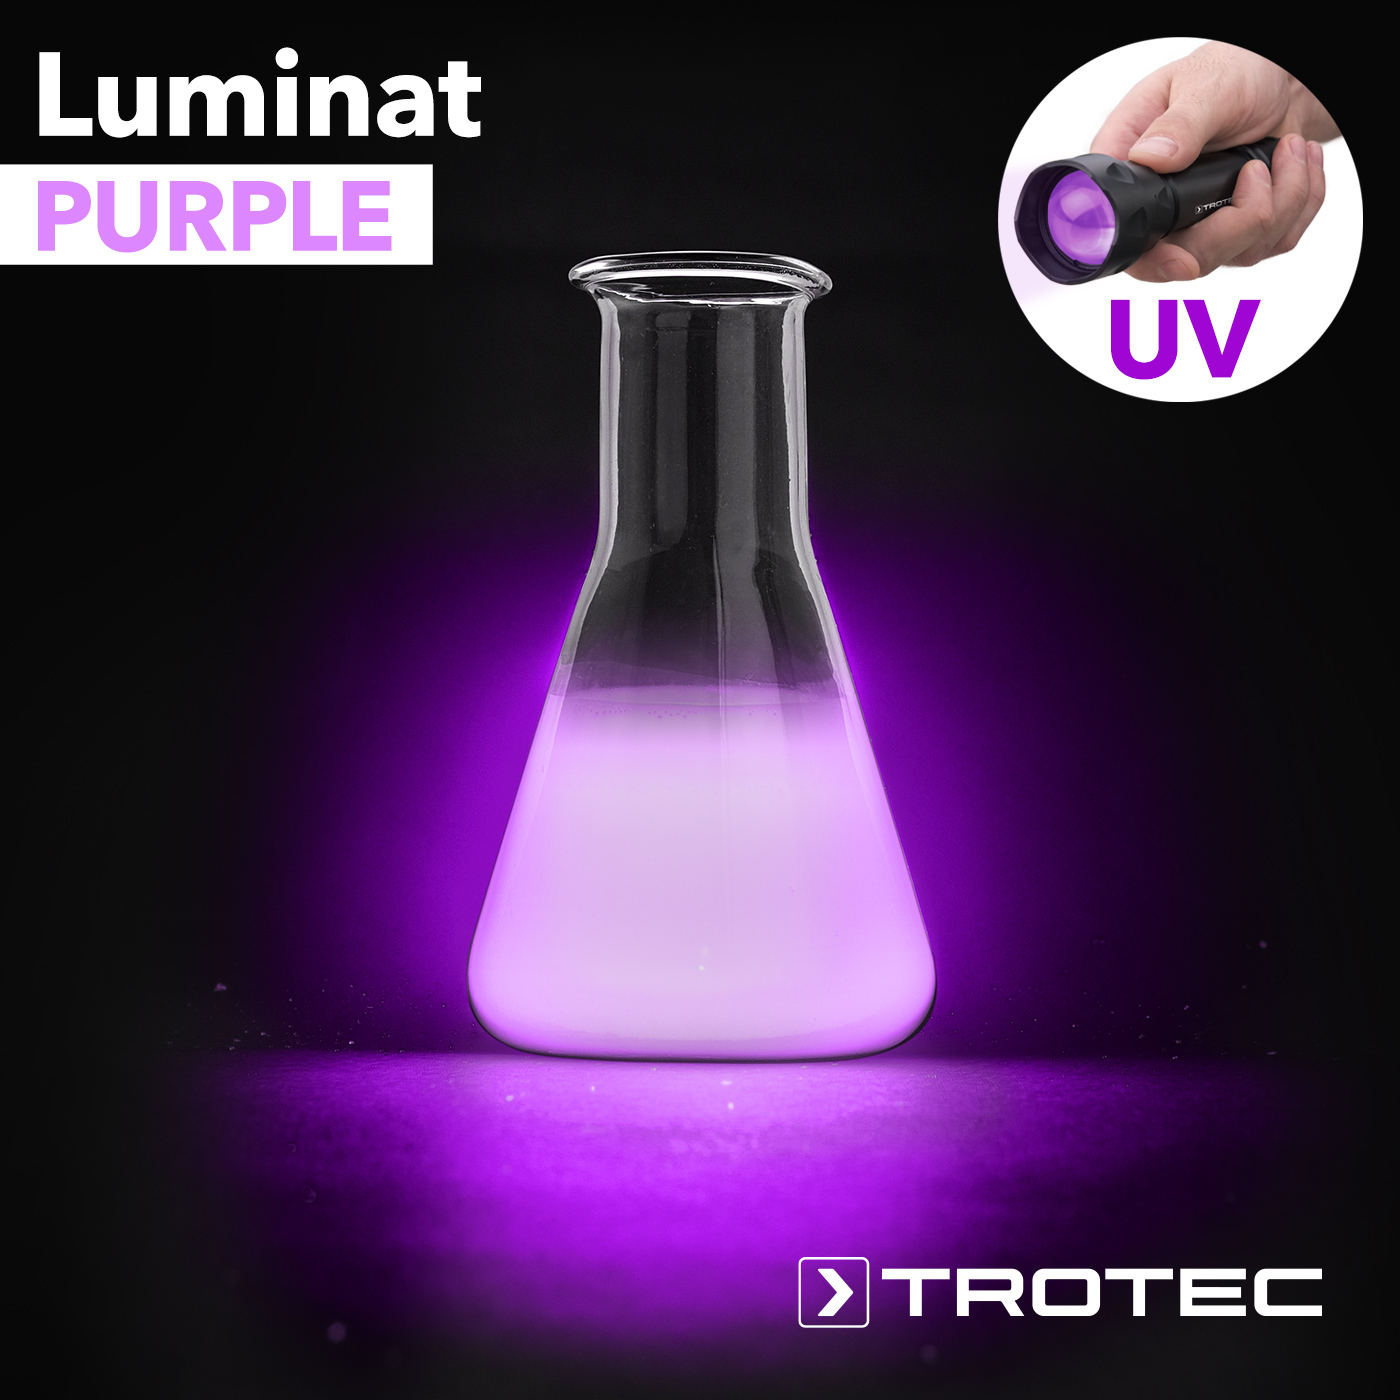 Trotec Luminat Purple